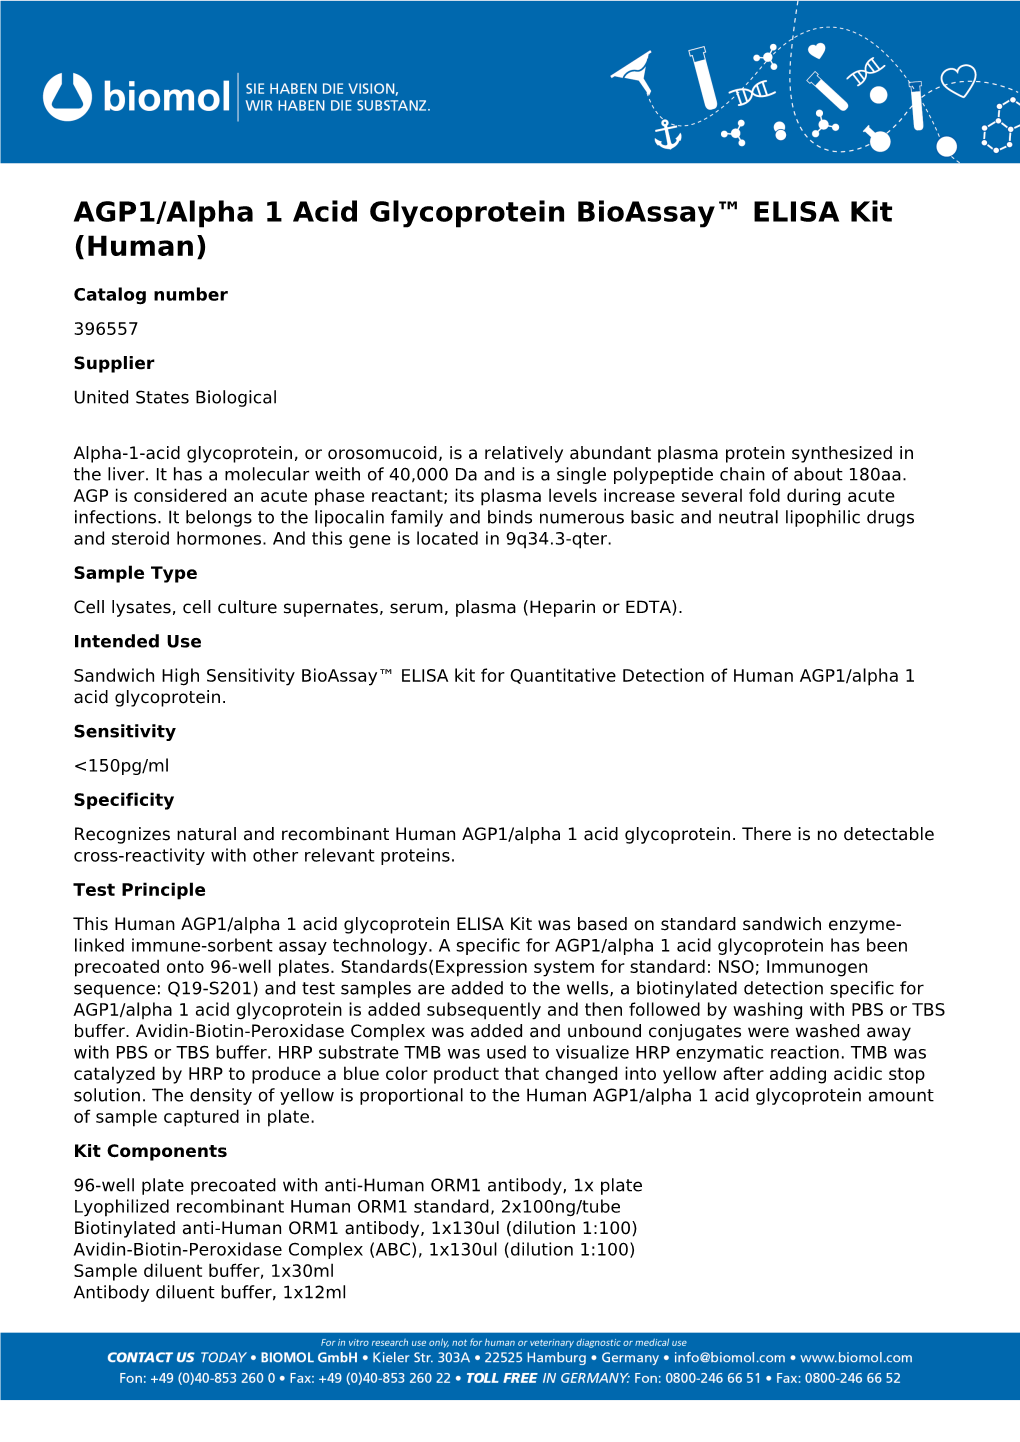 AGP1/Alpha 1 Acid Glycoprotein Bioassay™ ELISA Kit (Human)